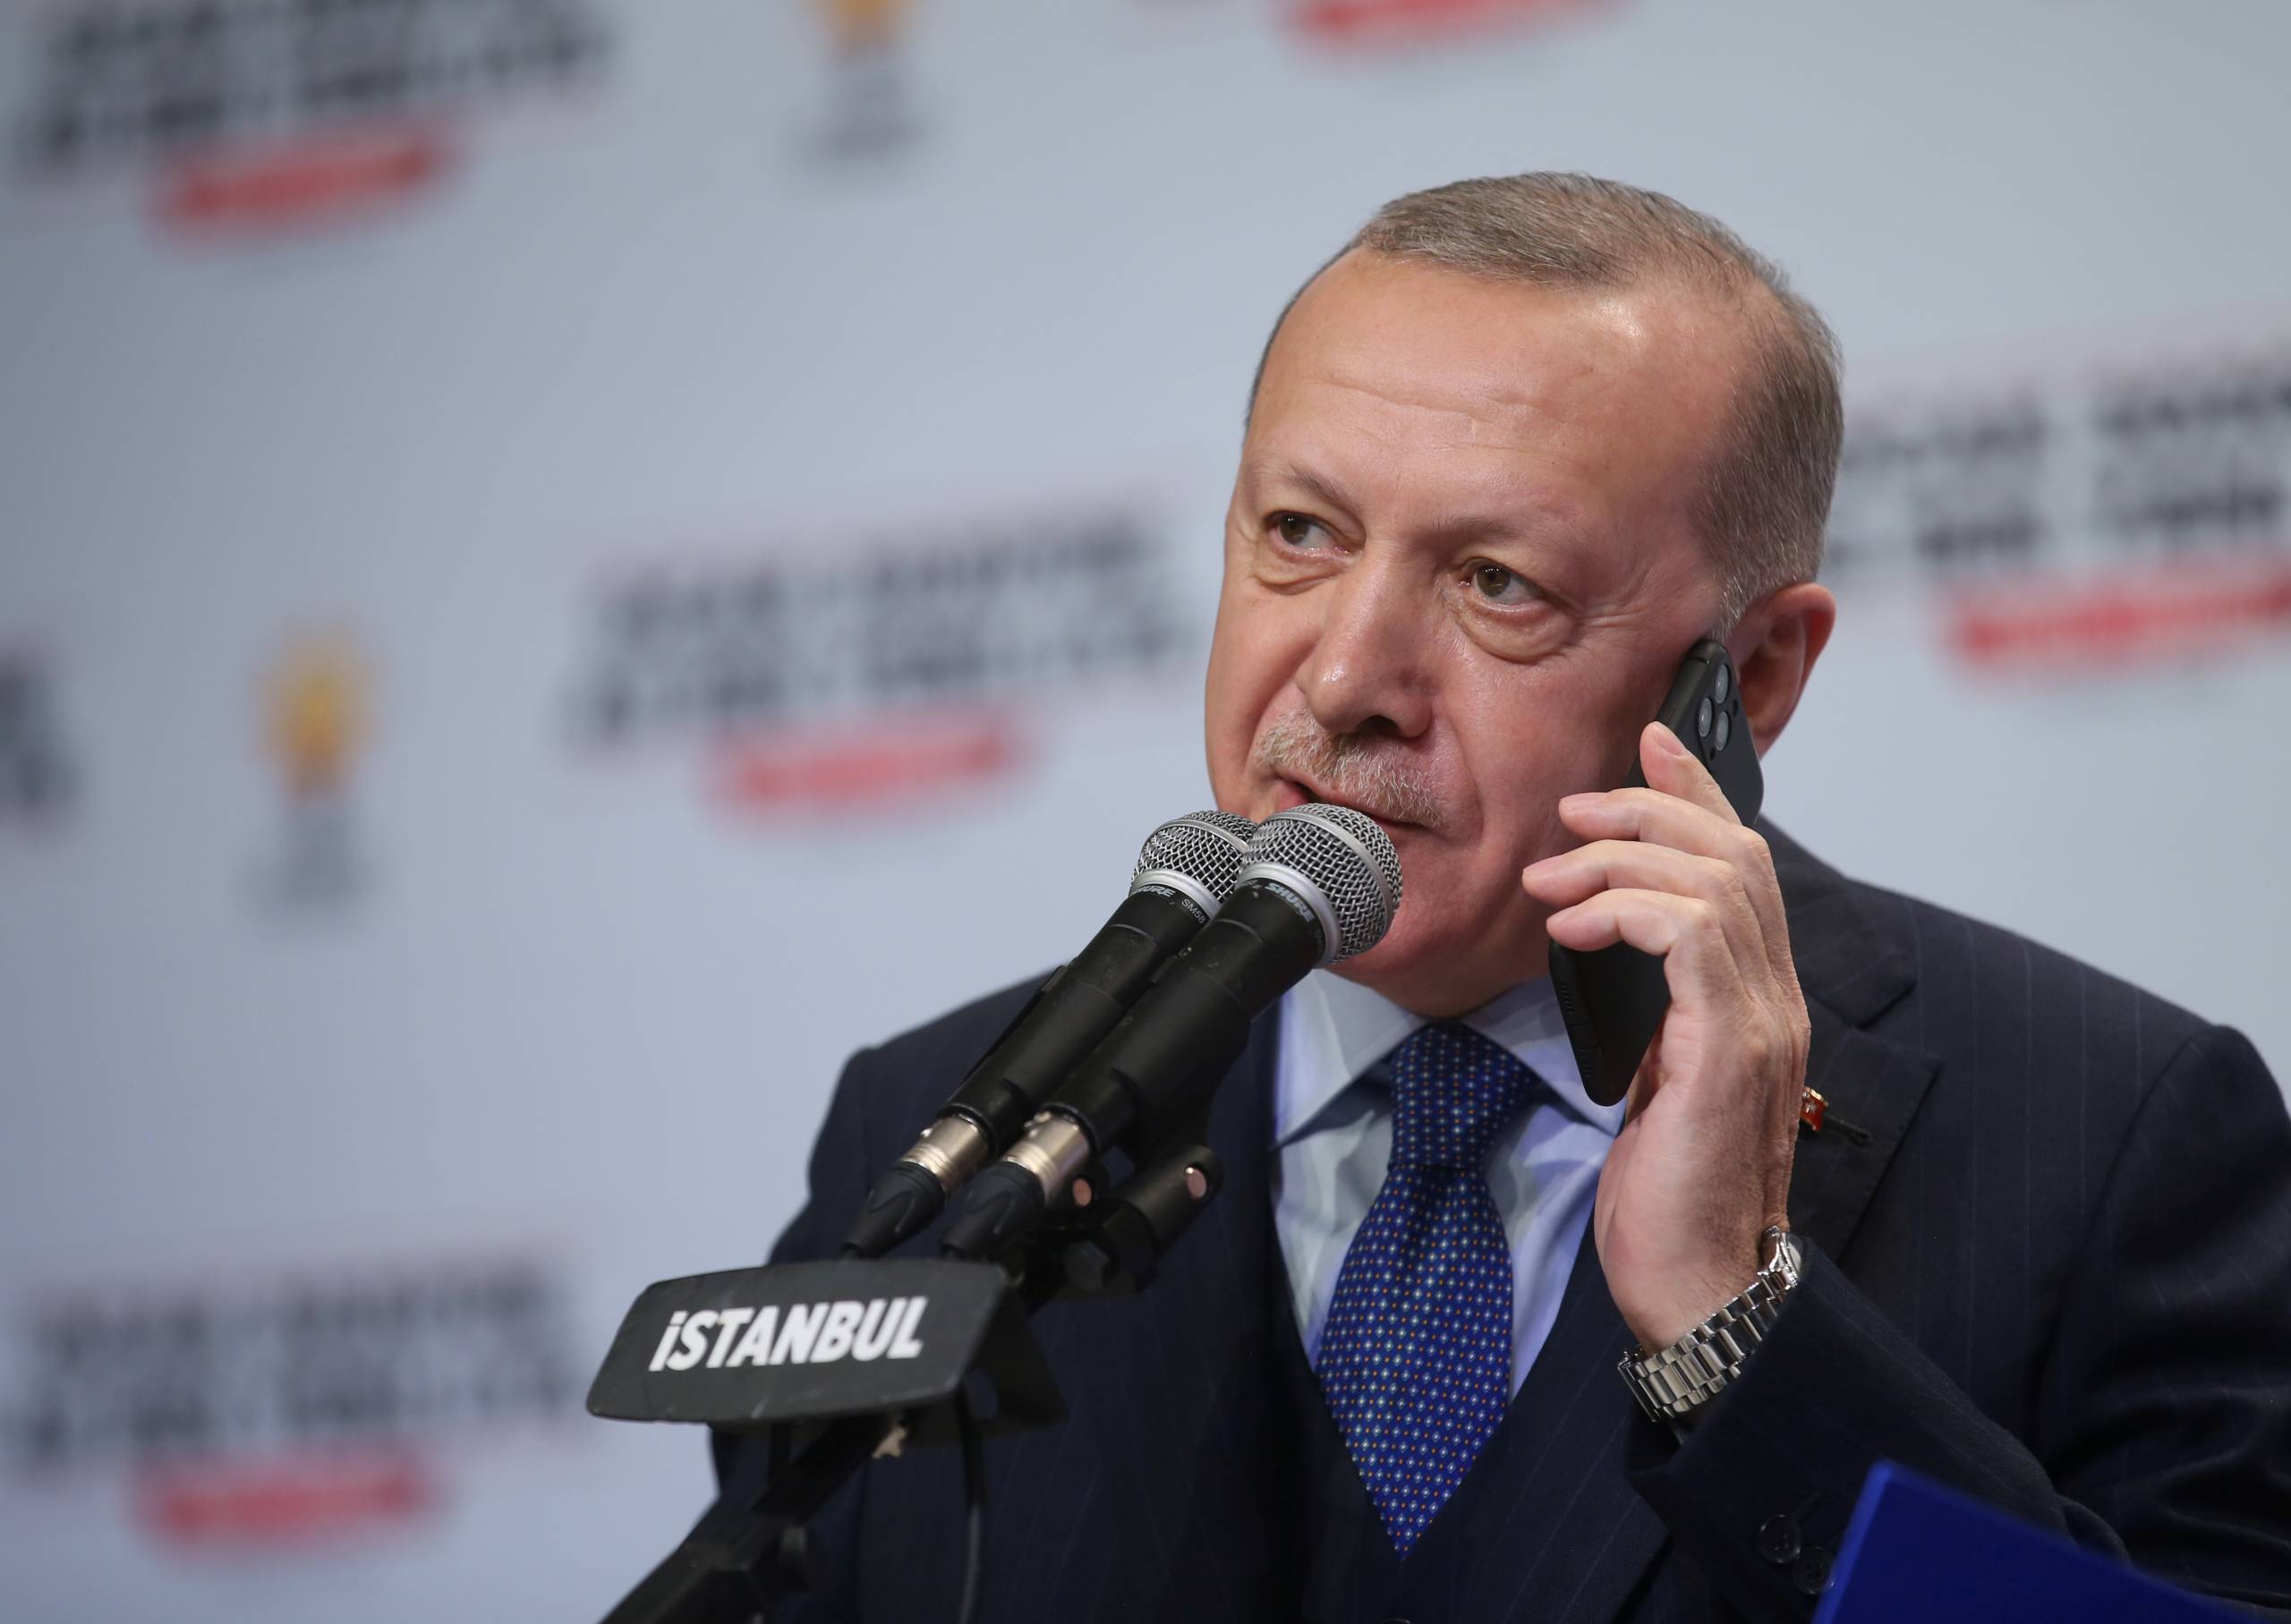 Turkish President, British PM Discuss Cooperation Over Phone